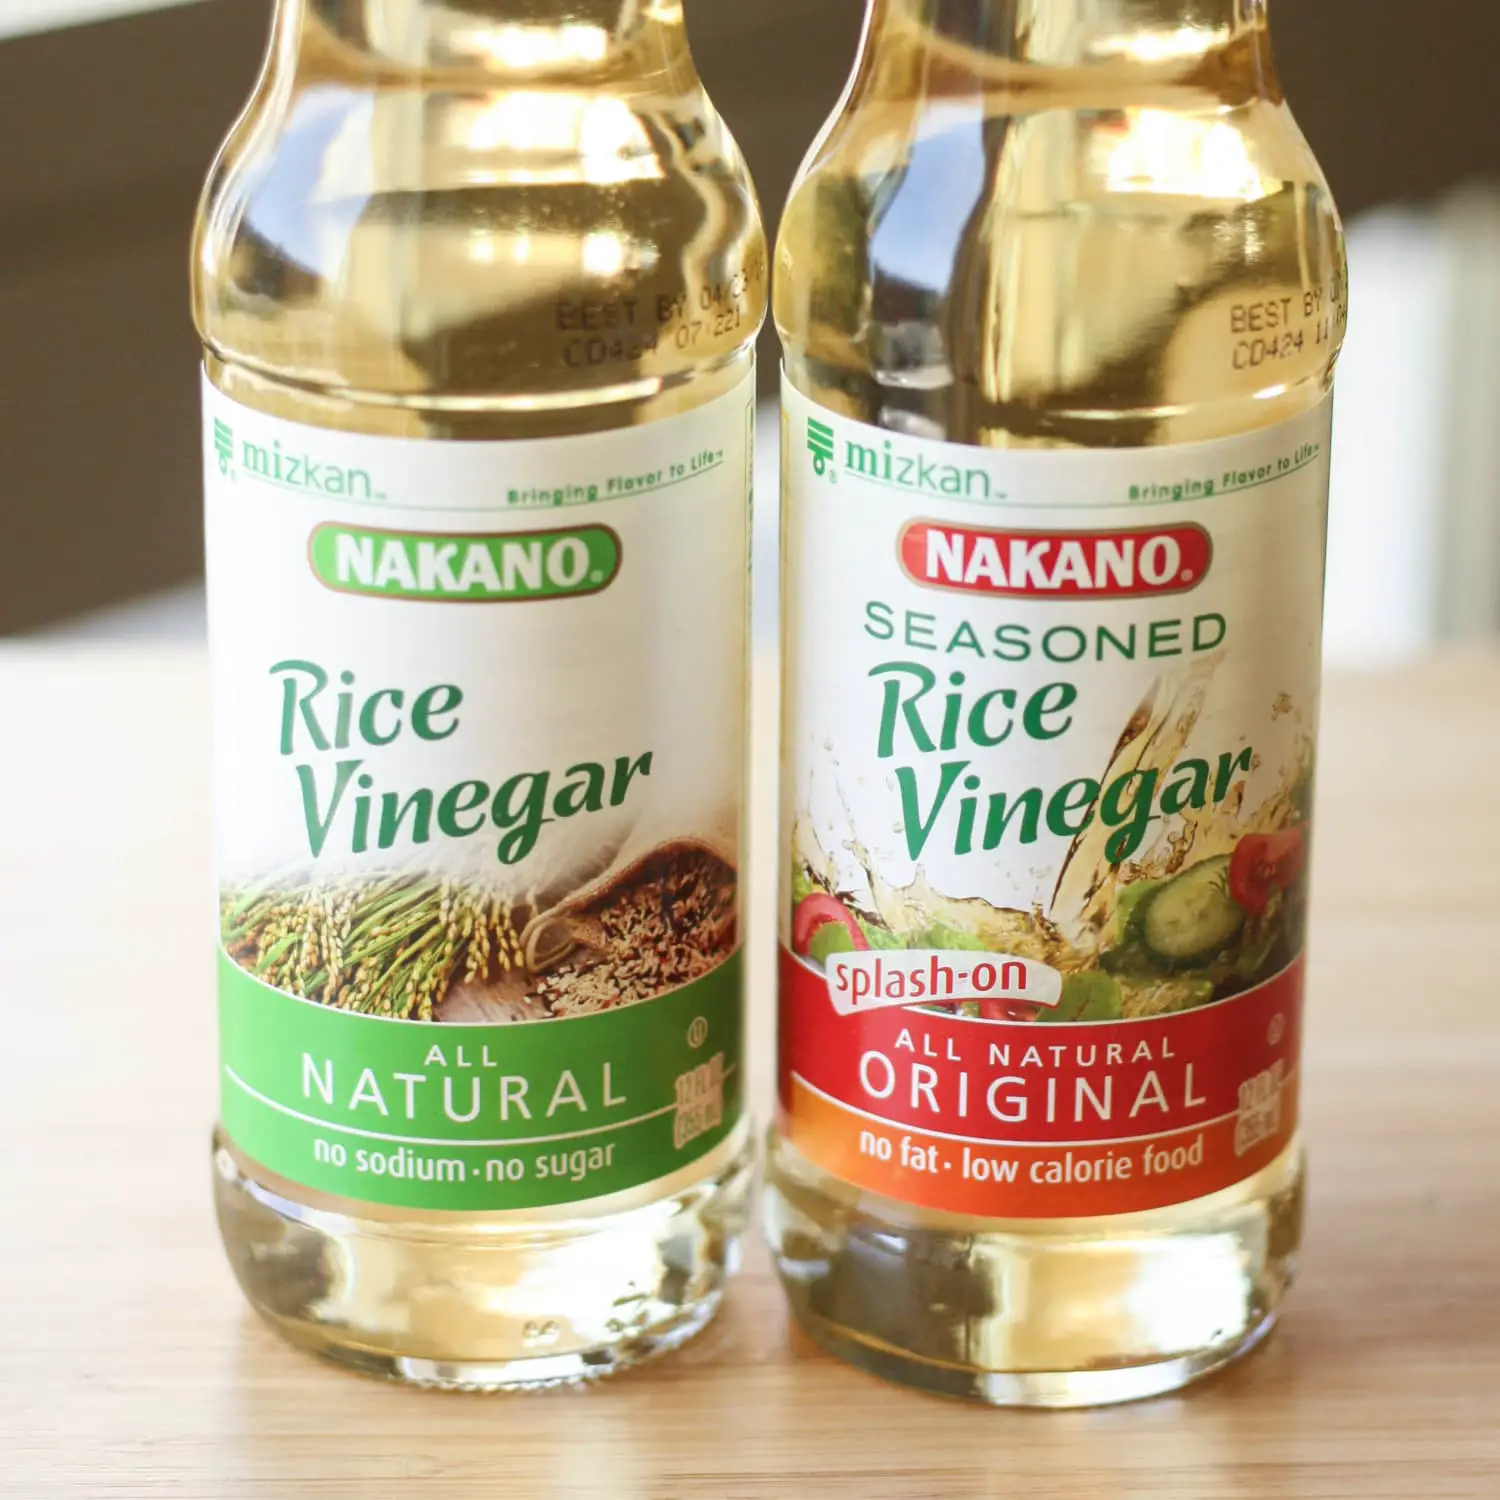 Does Rice Vinegar Go Bad?